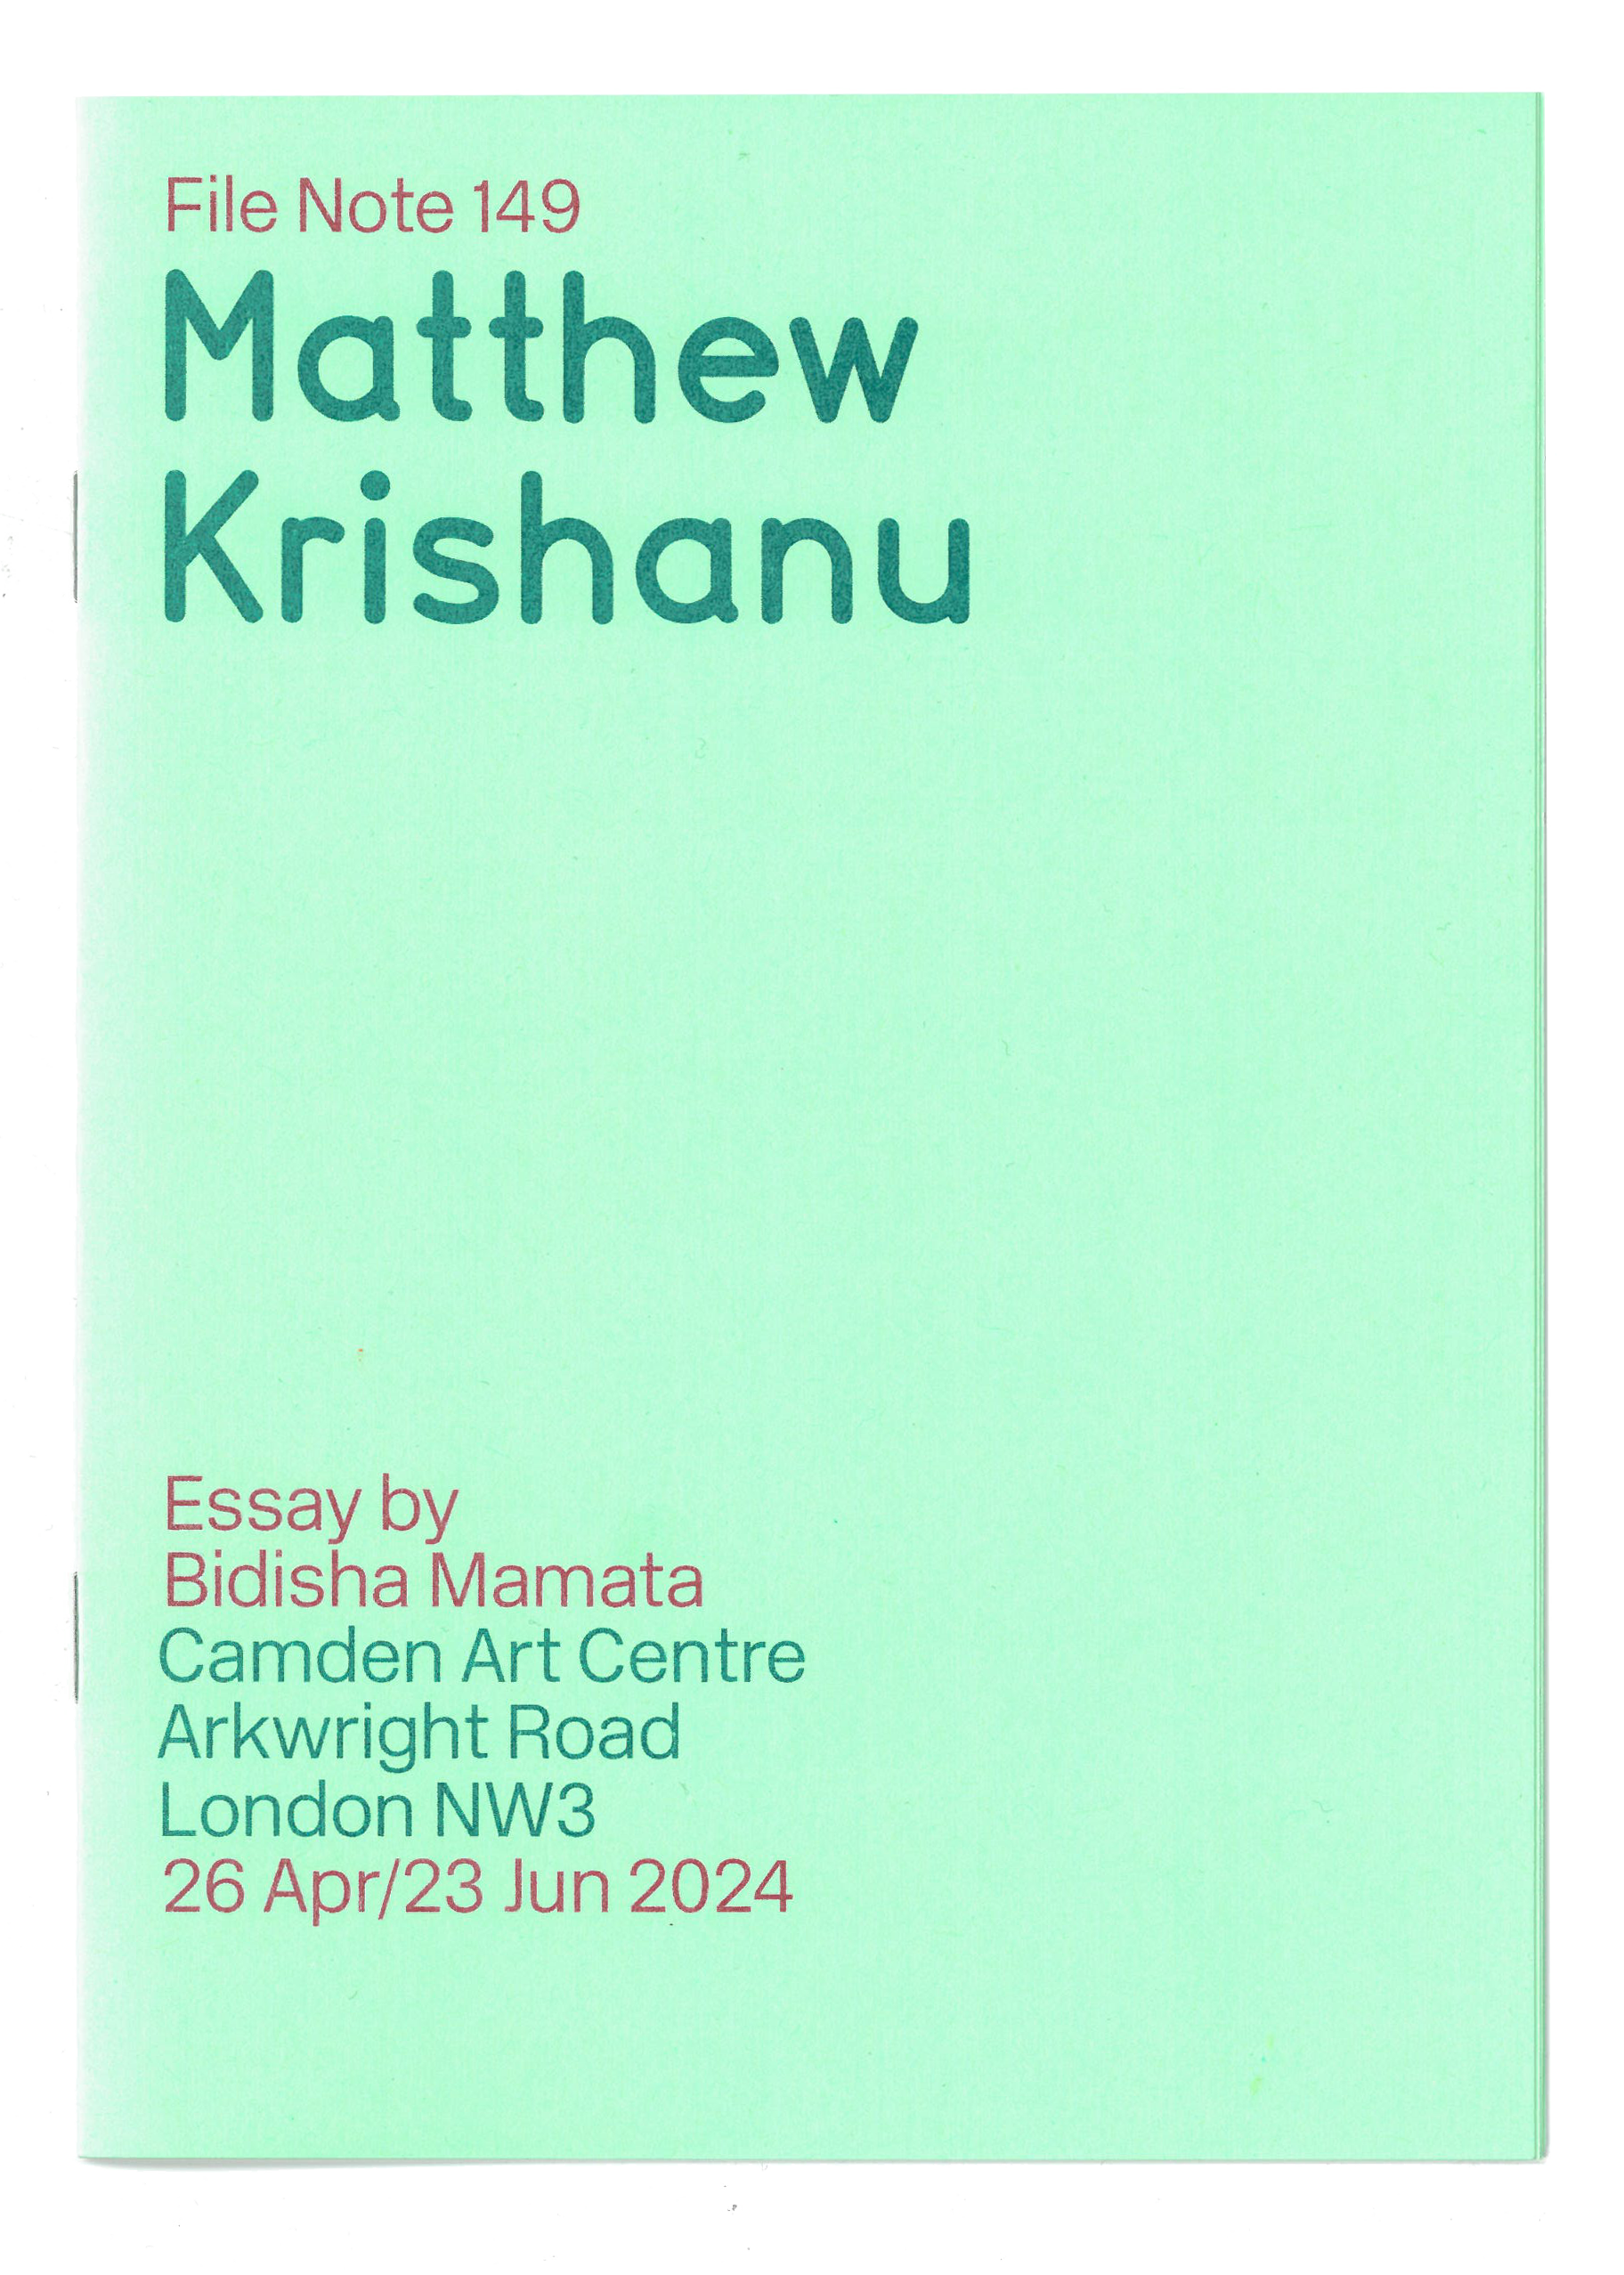 File Note 149, Matthew Krishanu